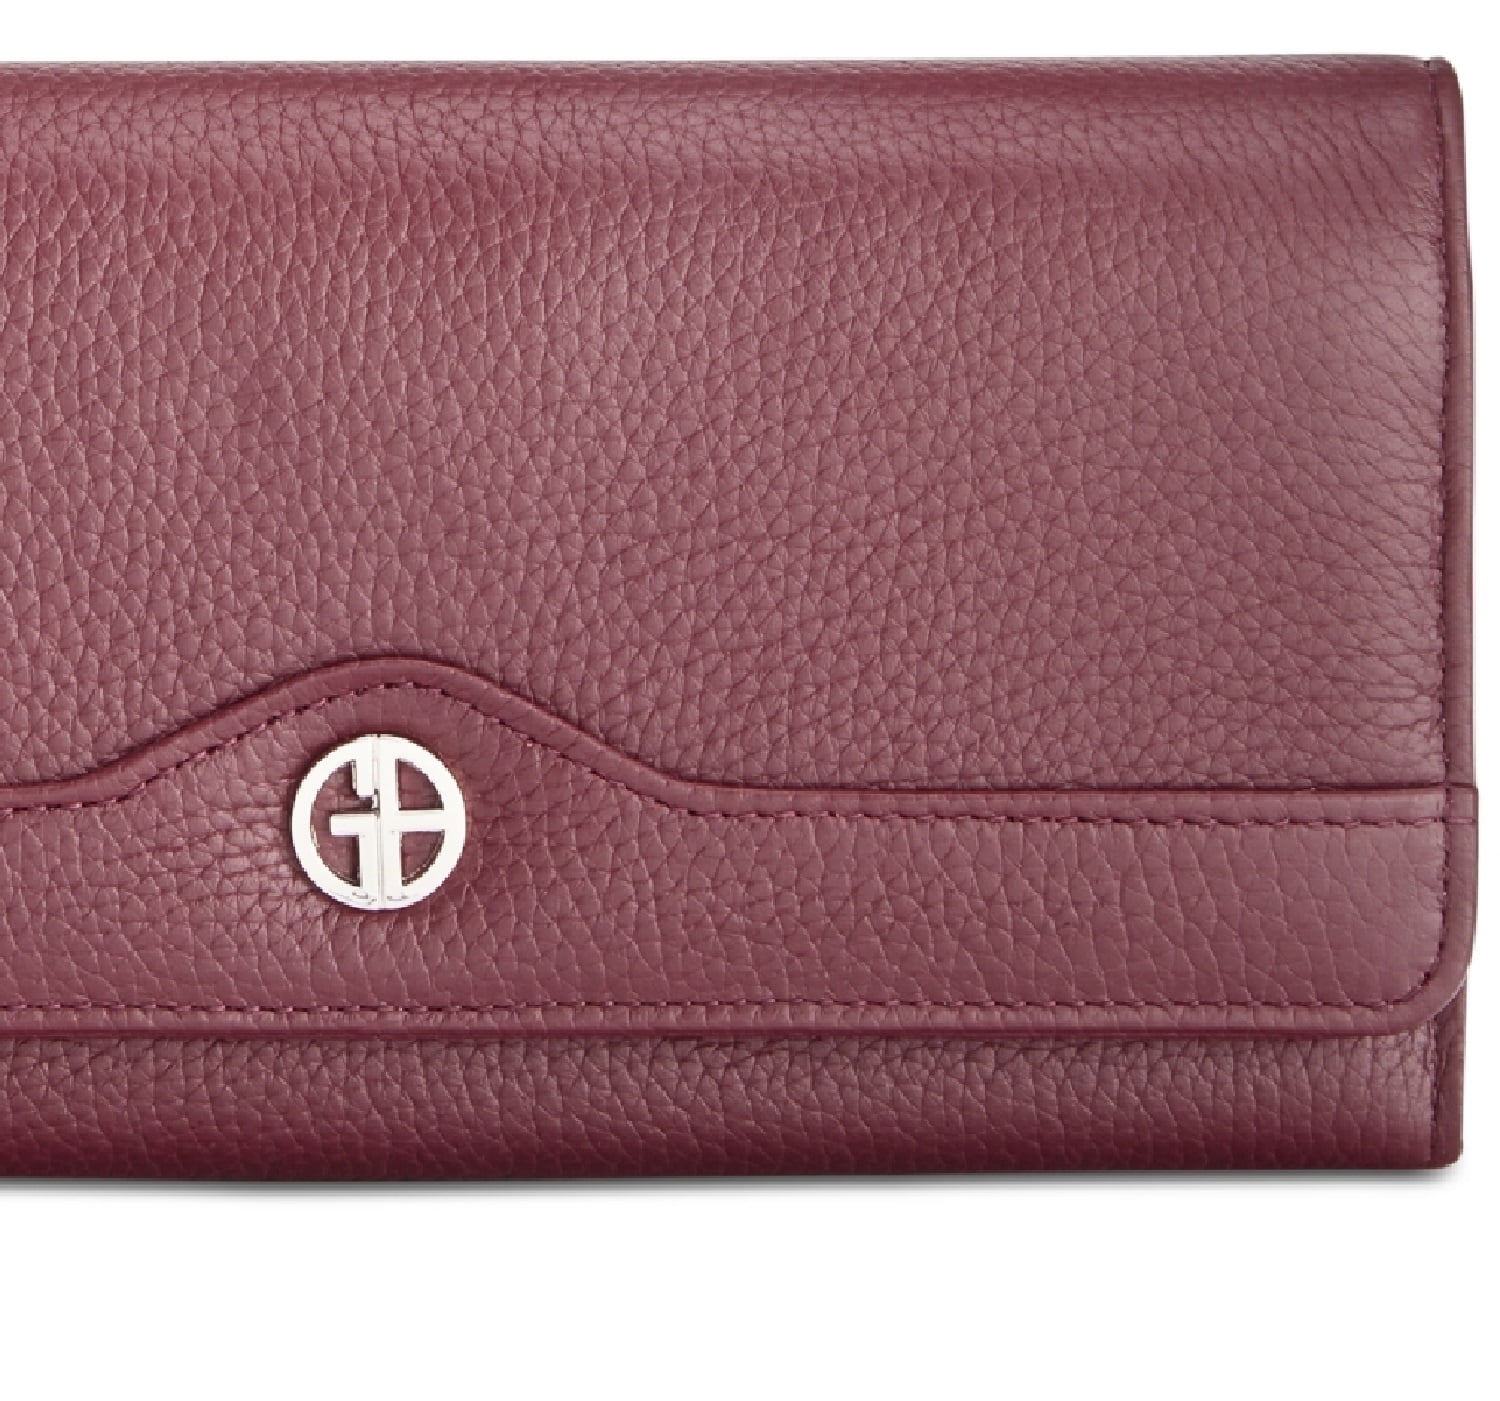 Giani Bernini Women's Pebble Leather Receipt Wallet Red Size Regular